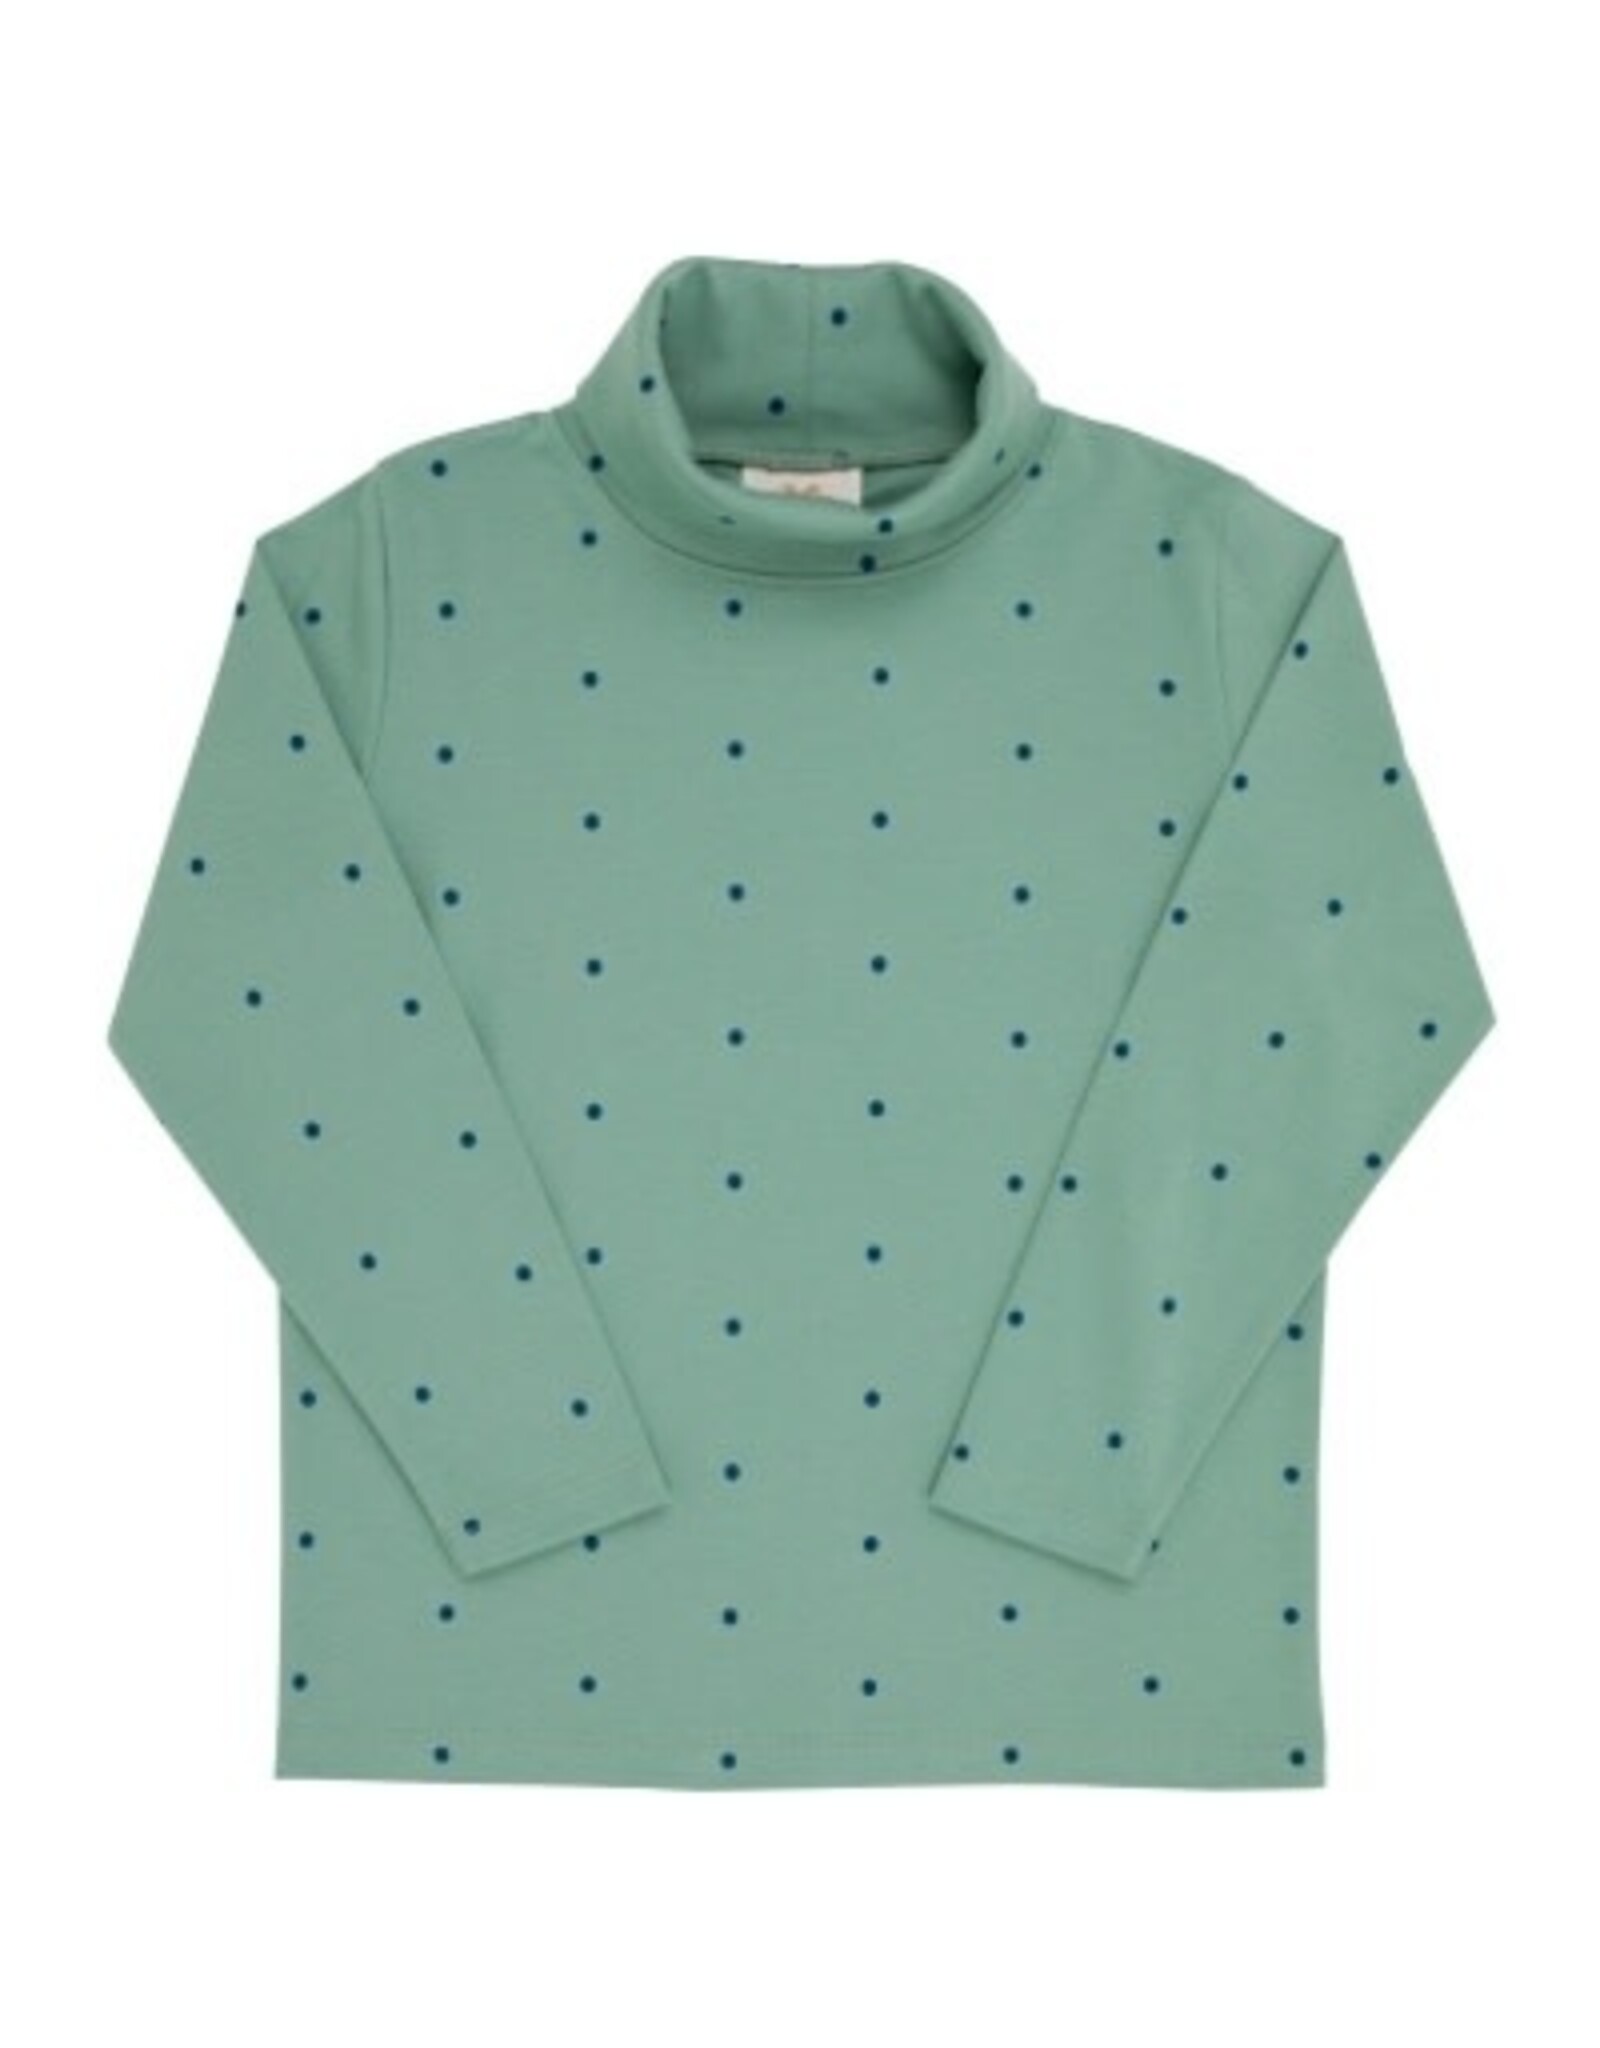 The Beaufort Bonnet Company Tatums Turtleneck Shirt, Gallatin Green Microdot